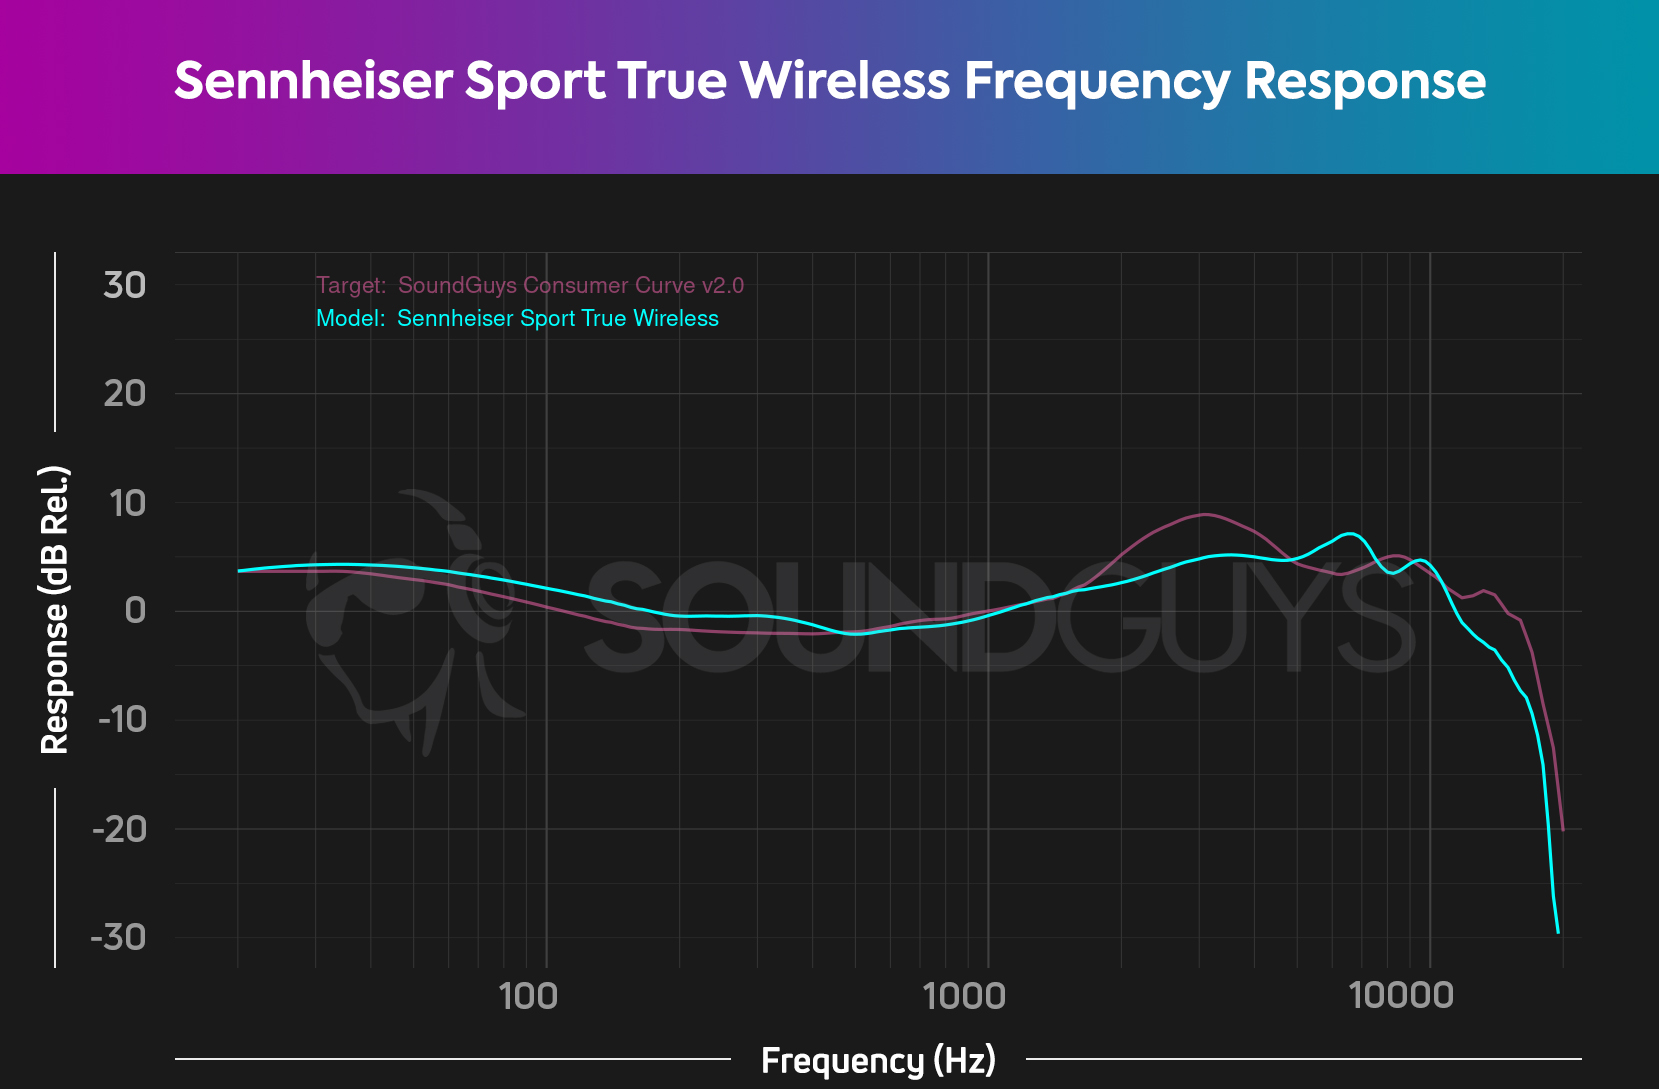 Sennheiser Sport True Wireless frequency response chart